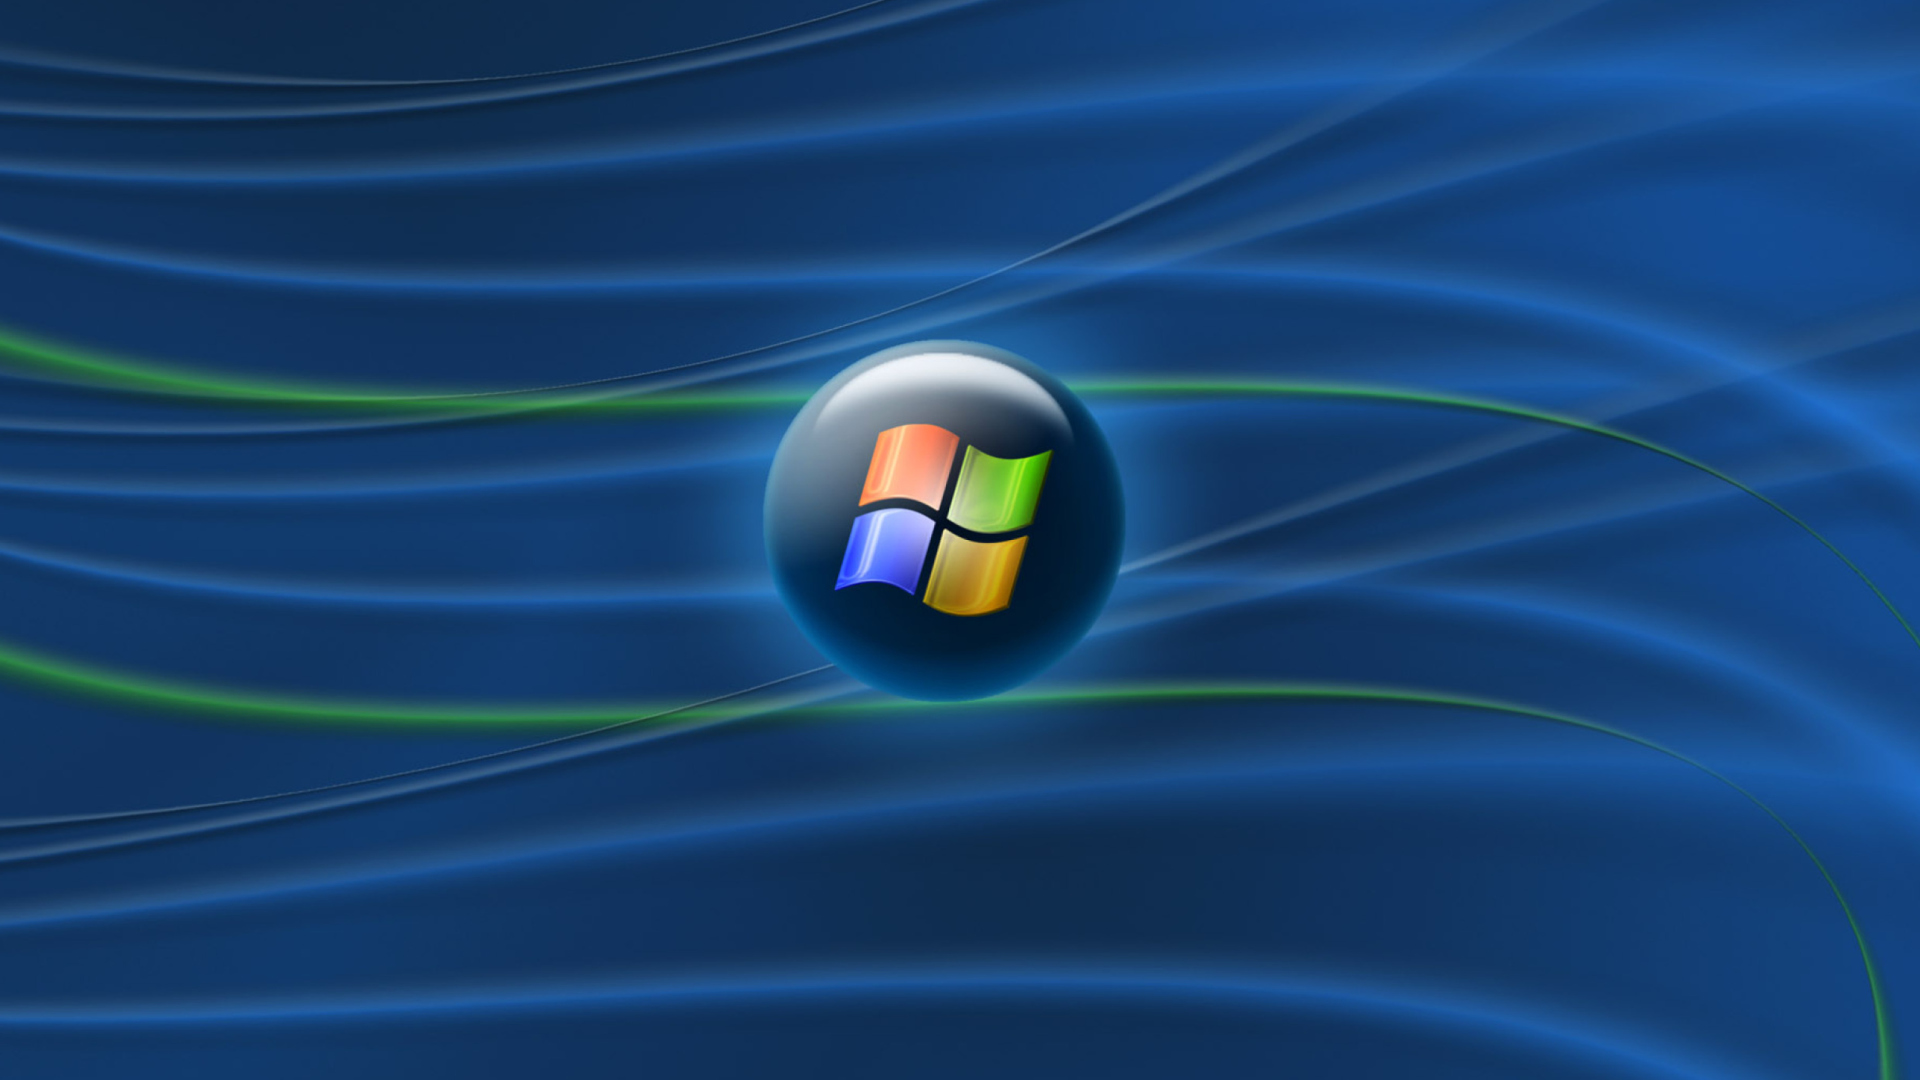 Blue Windows Vista Wallpaper For Desktop 19x1080 Full Hd